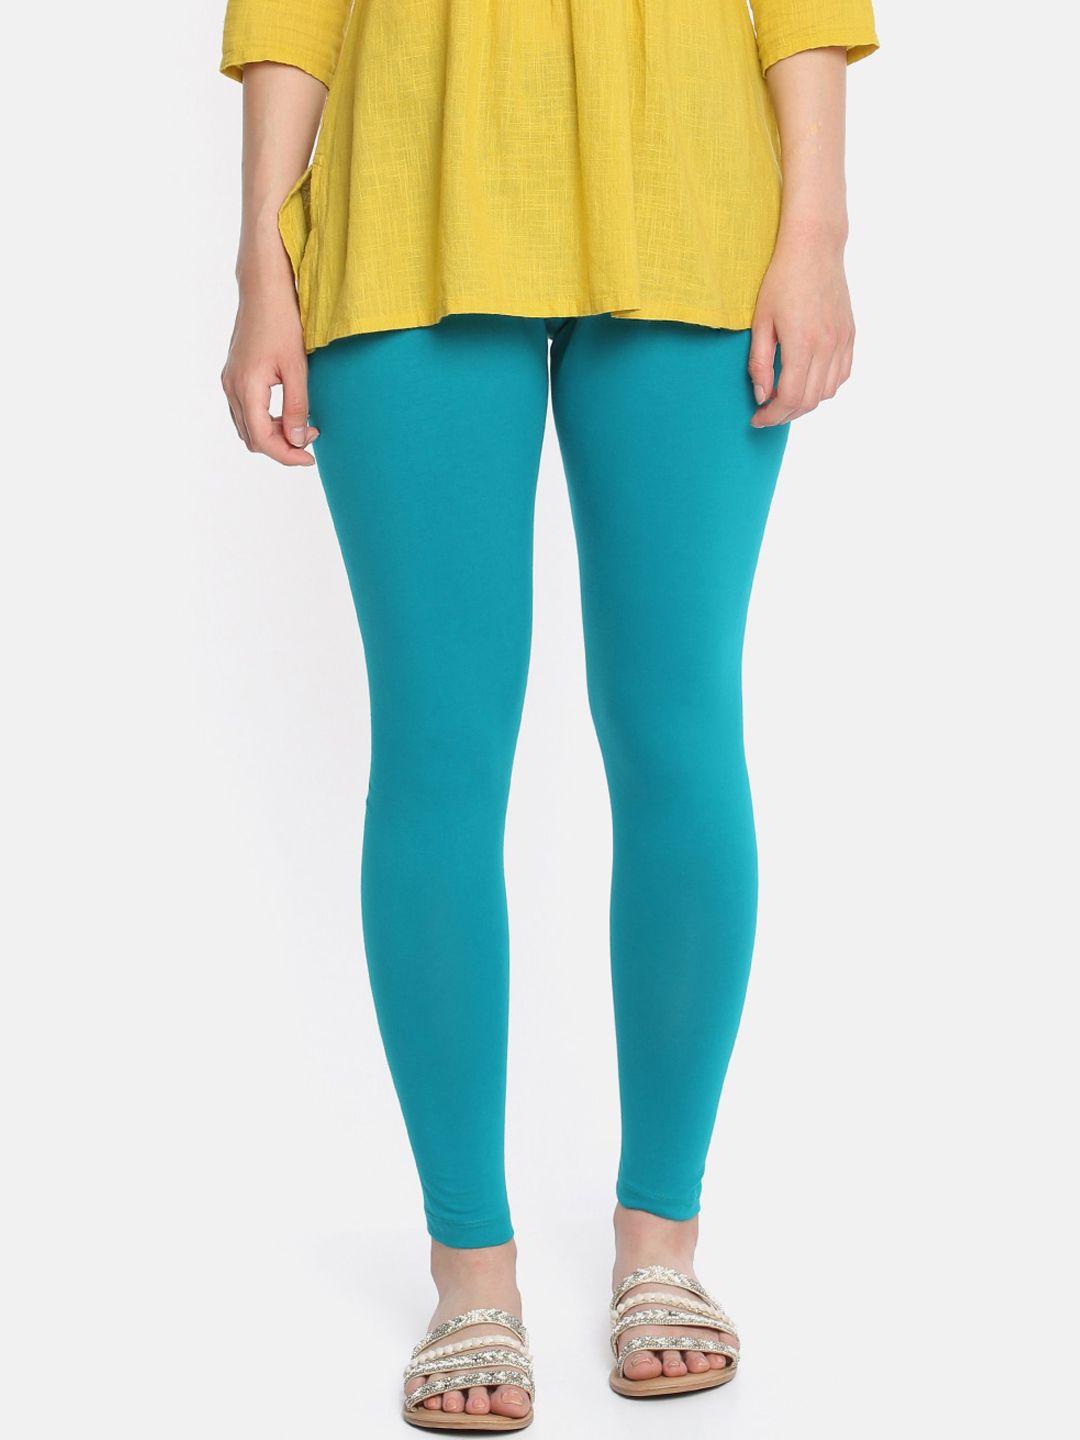 dollar missy women turquoise-blue solid ankle-length leggings